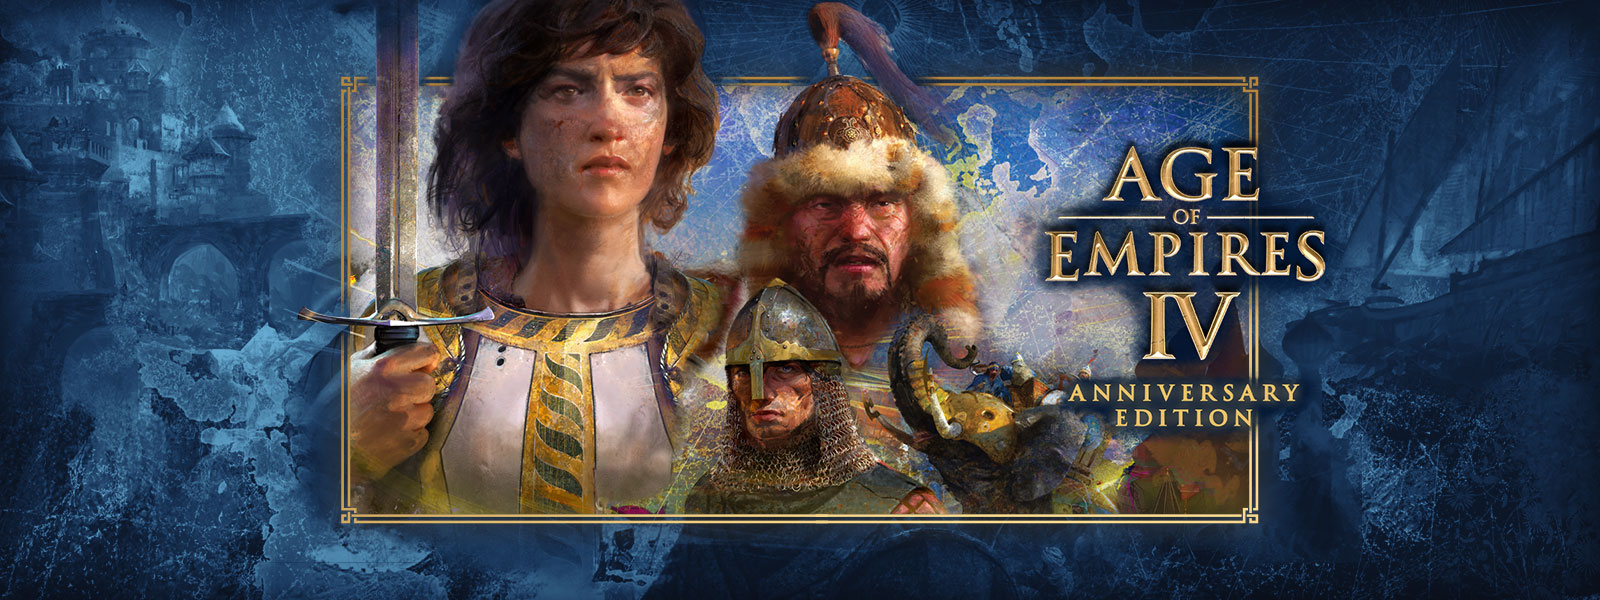 《Age of Empires IV: Anniversary Edition》。三個角色與不同的戰爭場景和在他們周圍的武裝大象。